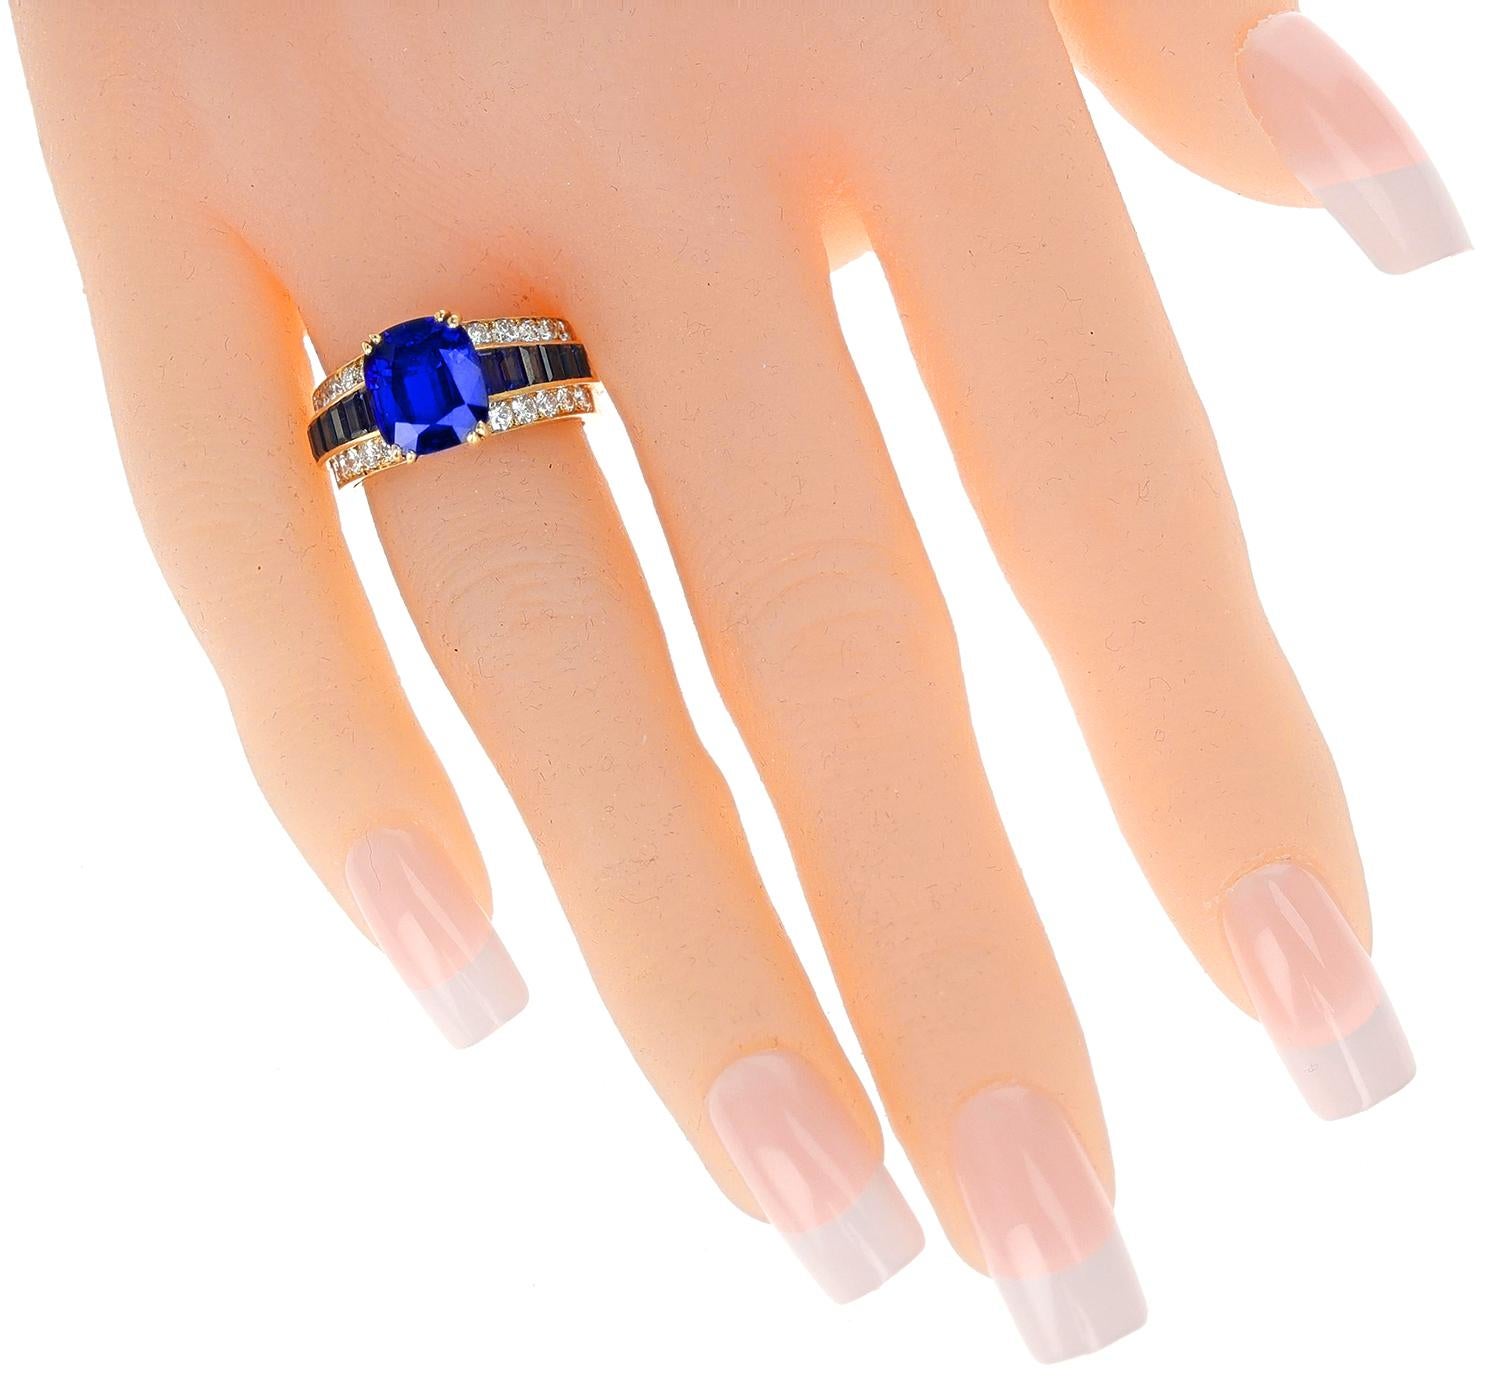 emily mariko engagement ring